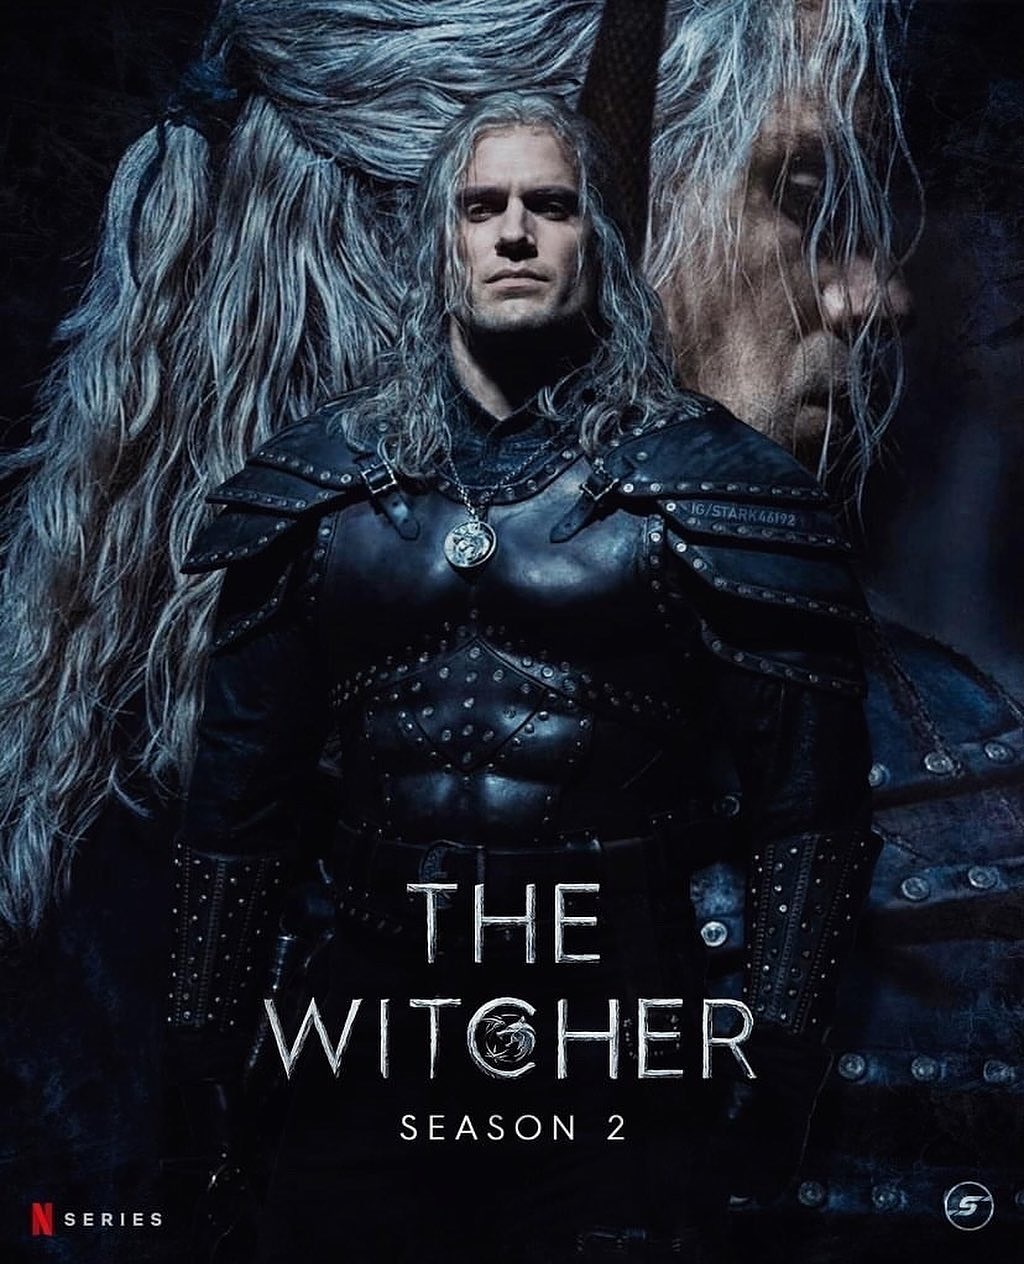 The Witcher (Season 2) Hindi Dubbed (5.1 DD) [Dual Audio] All Episodes | WEB-DL 1080p 720p 480p HD [2021 Netflix Series]